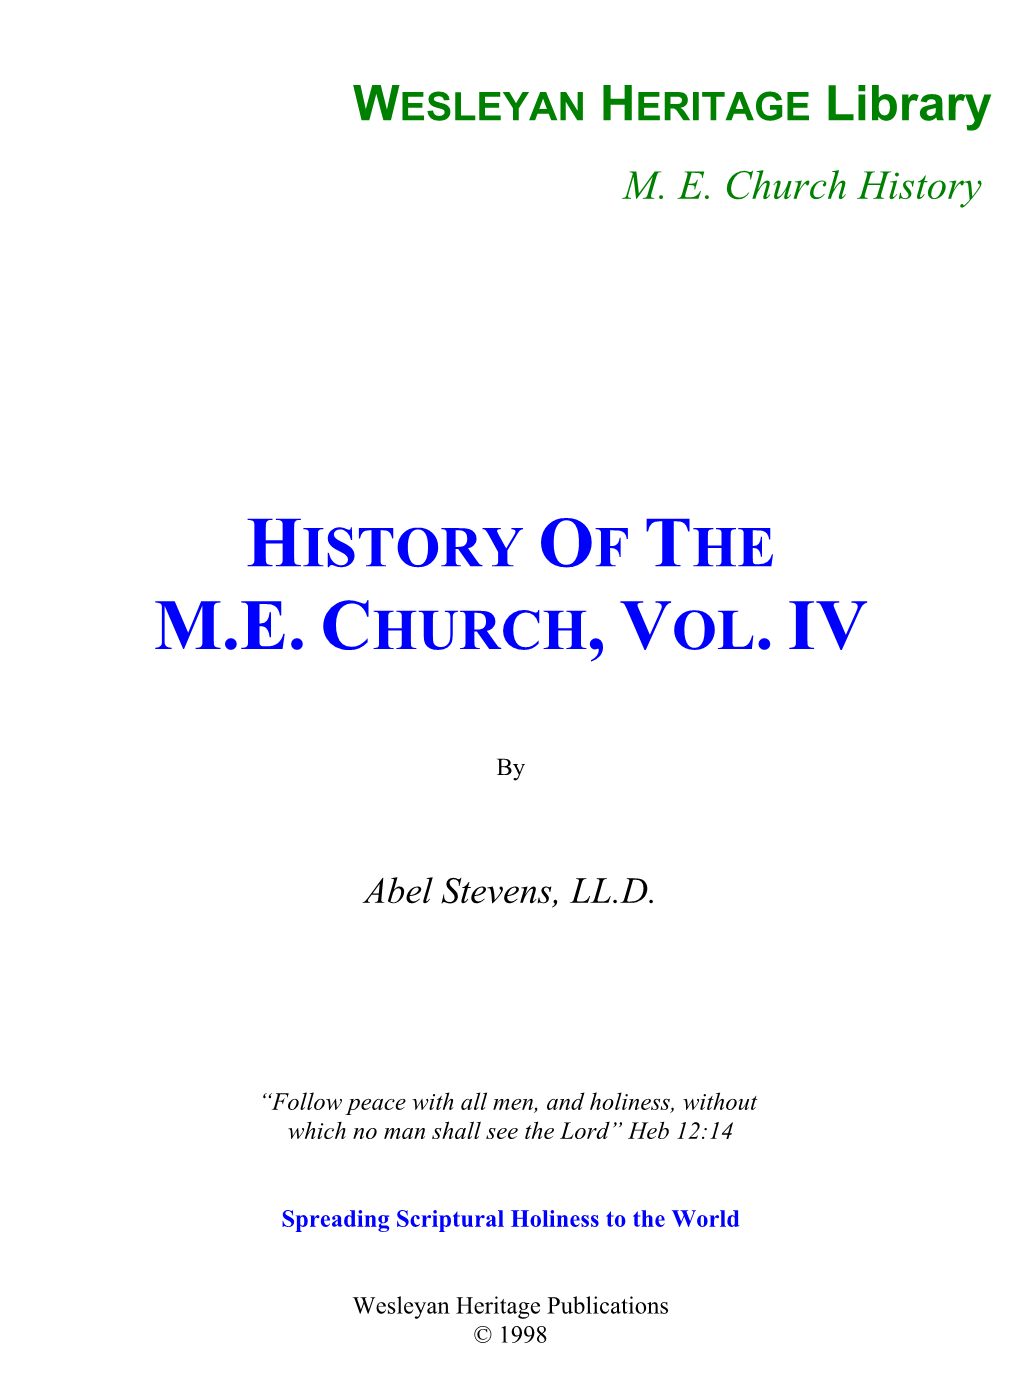 History of the M.E. Church, Vol. Iv